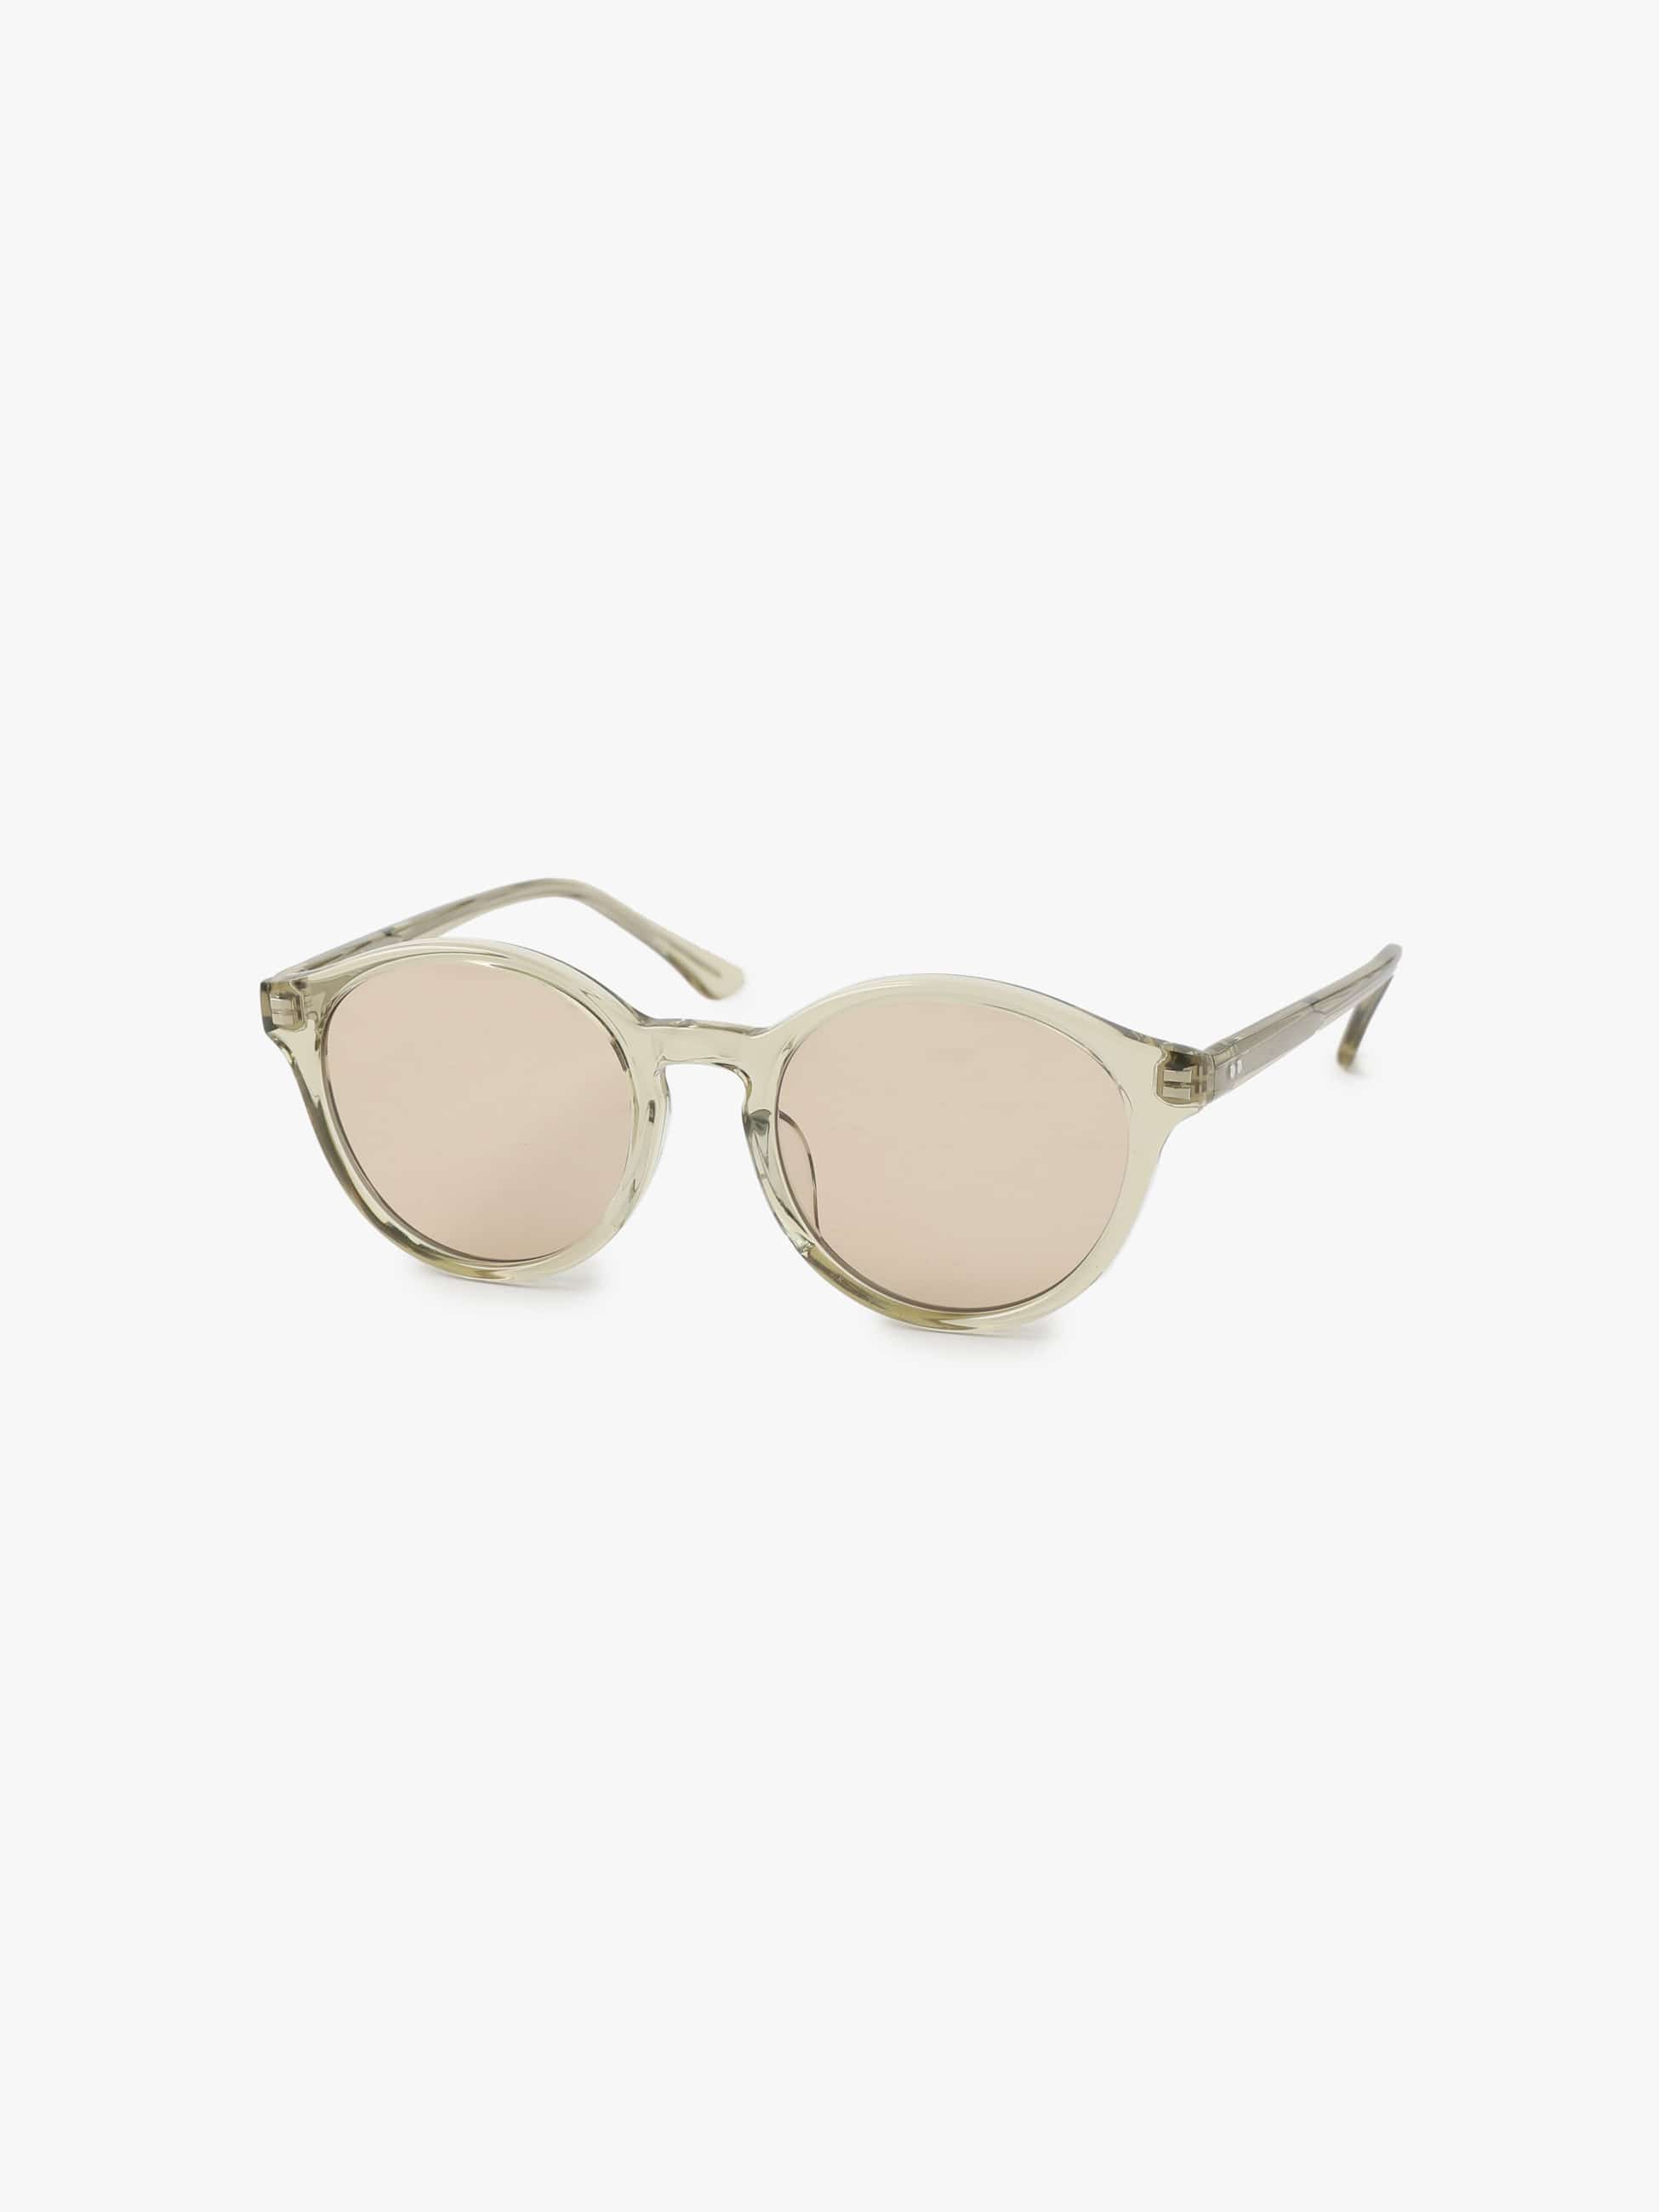 Sunglasses (RH-17 khaki)｜Ron Herman(ロンハーマン)｜Ron Herman